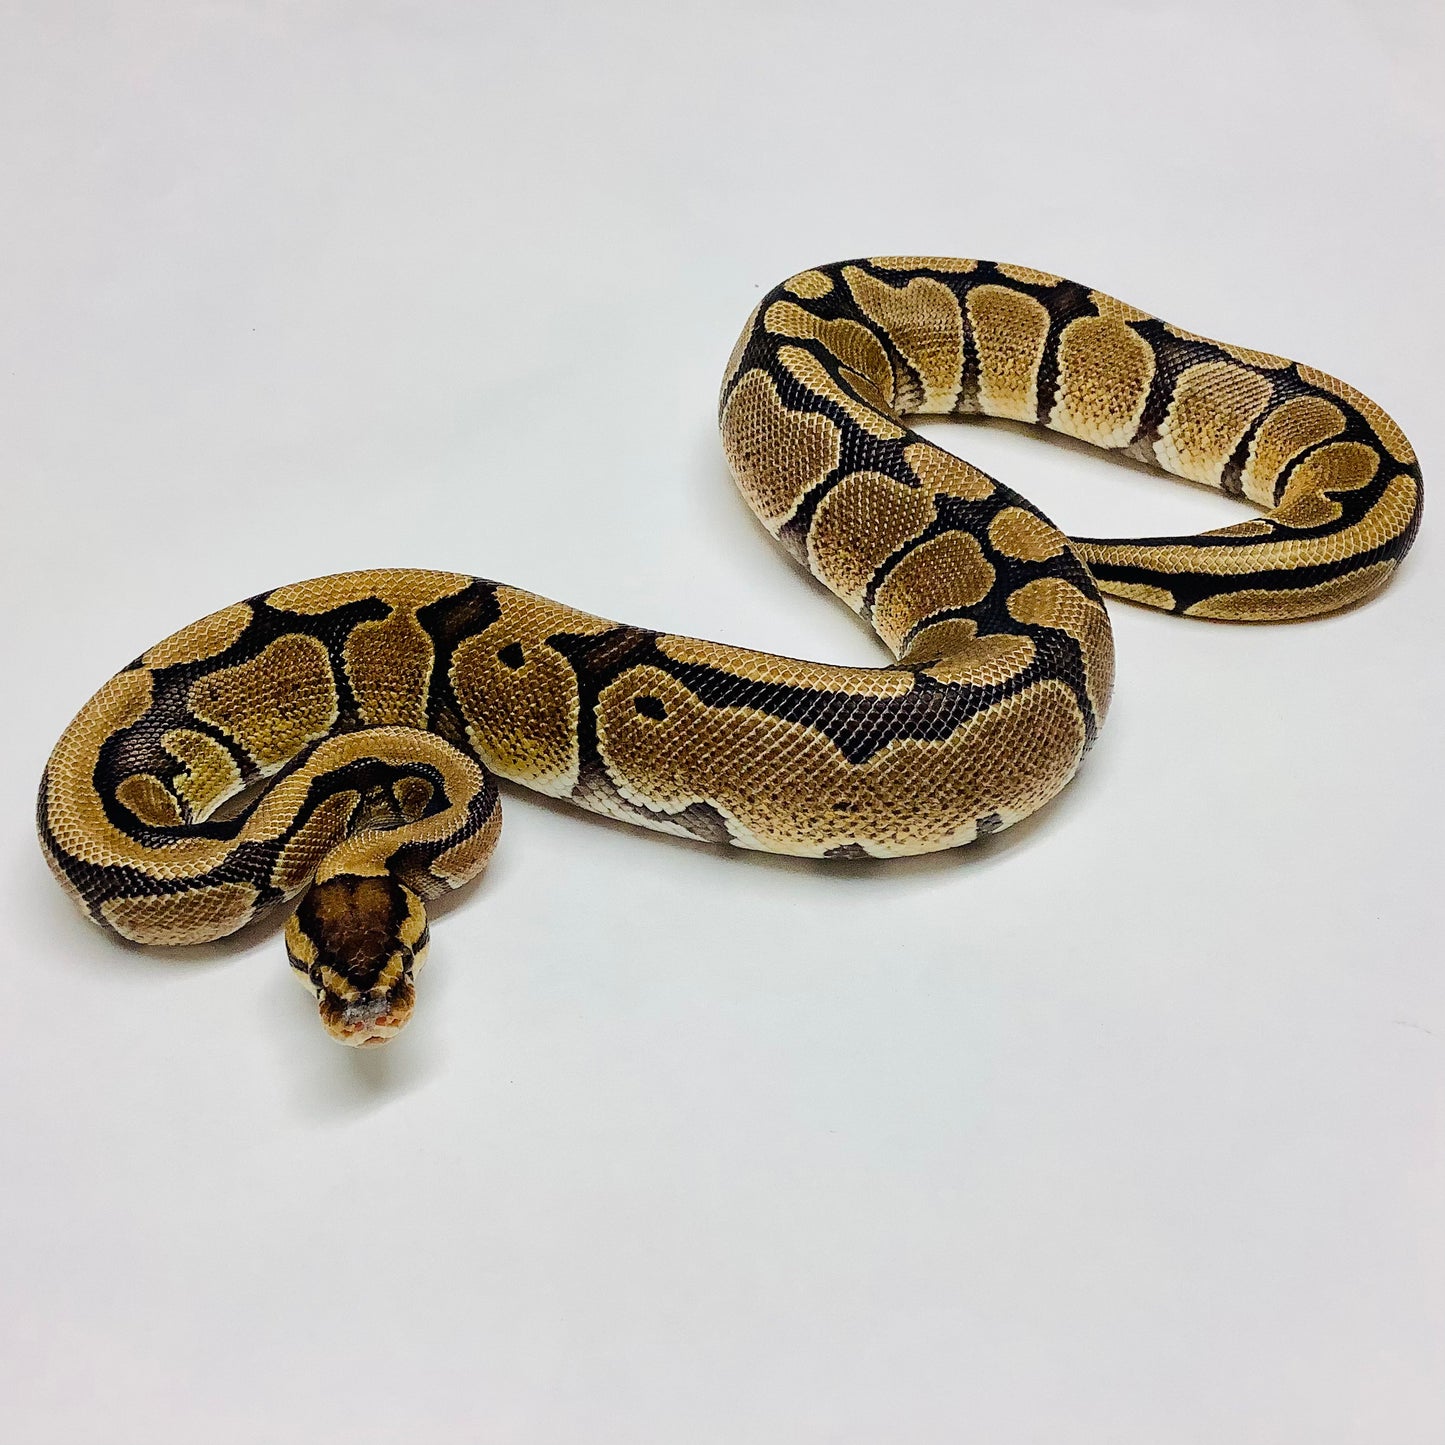 Red Stripe Ball Python - Male #2021M01-1